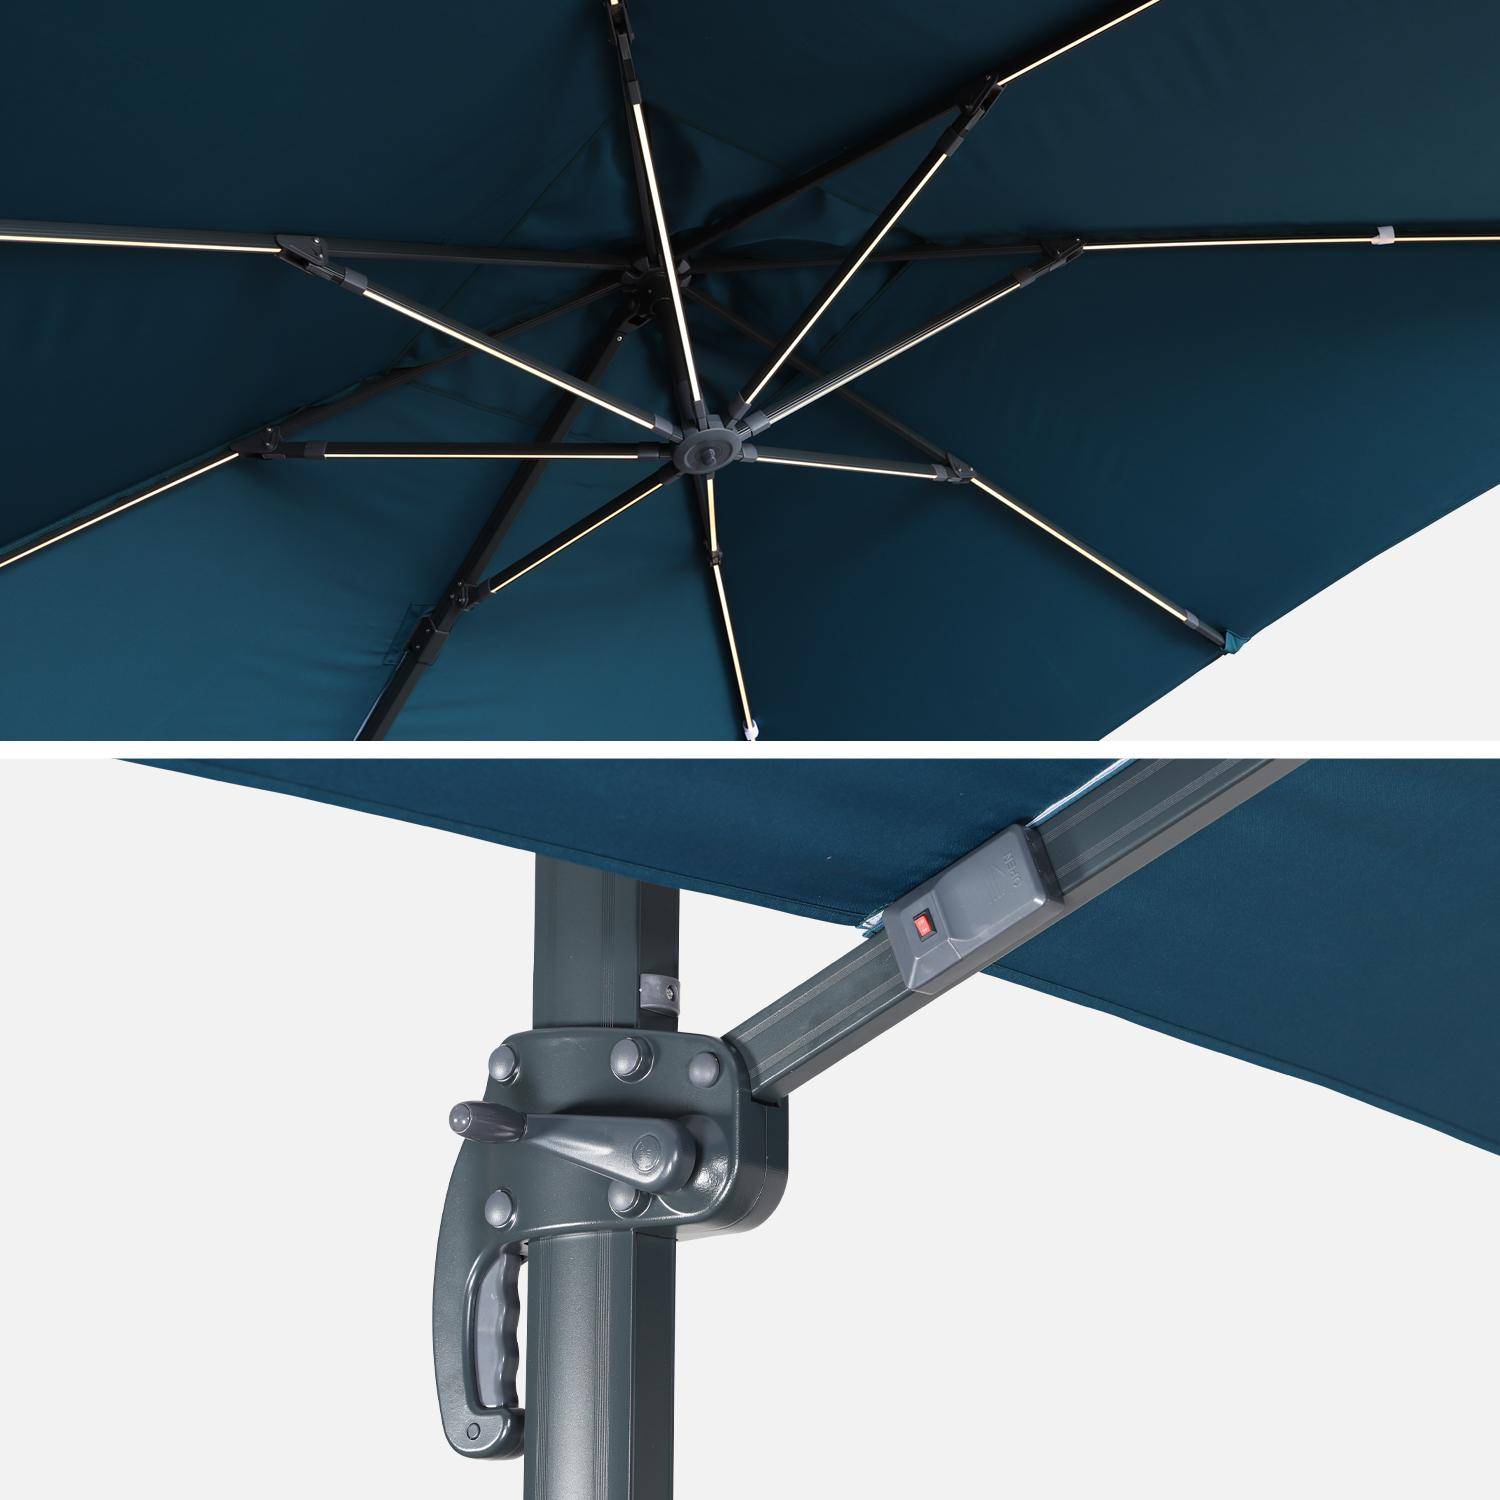 3x3m, Luce, eend blauwe LED parasol op zonne-energie met geïntegreerd licht + hoes,sweeek,Photo6